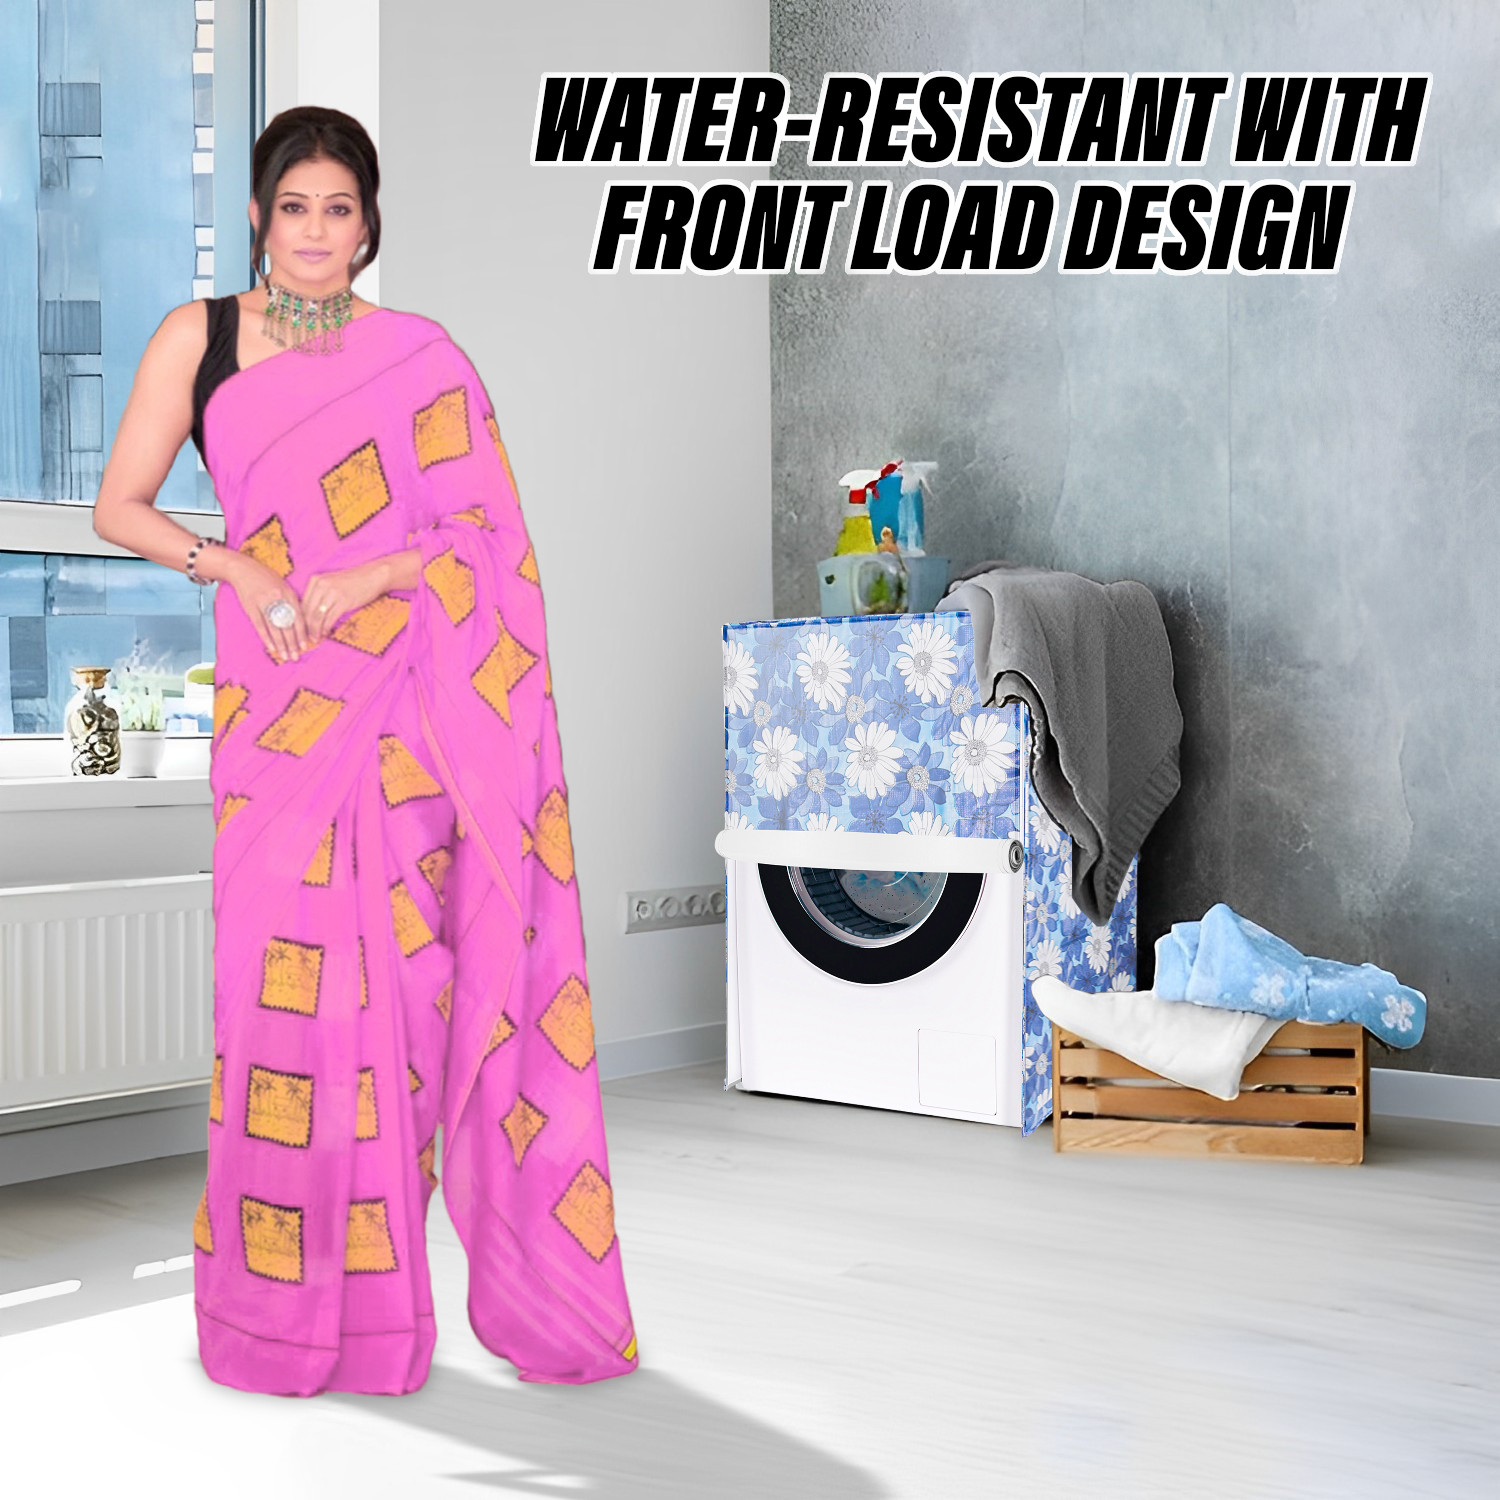 Kuber Industries Washing Machine Cover | Sun Flower Print Washing Machine Cover | PVC Front Load Washing Machine Cover | Blue